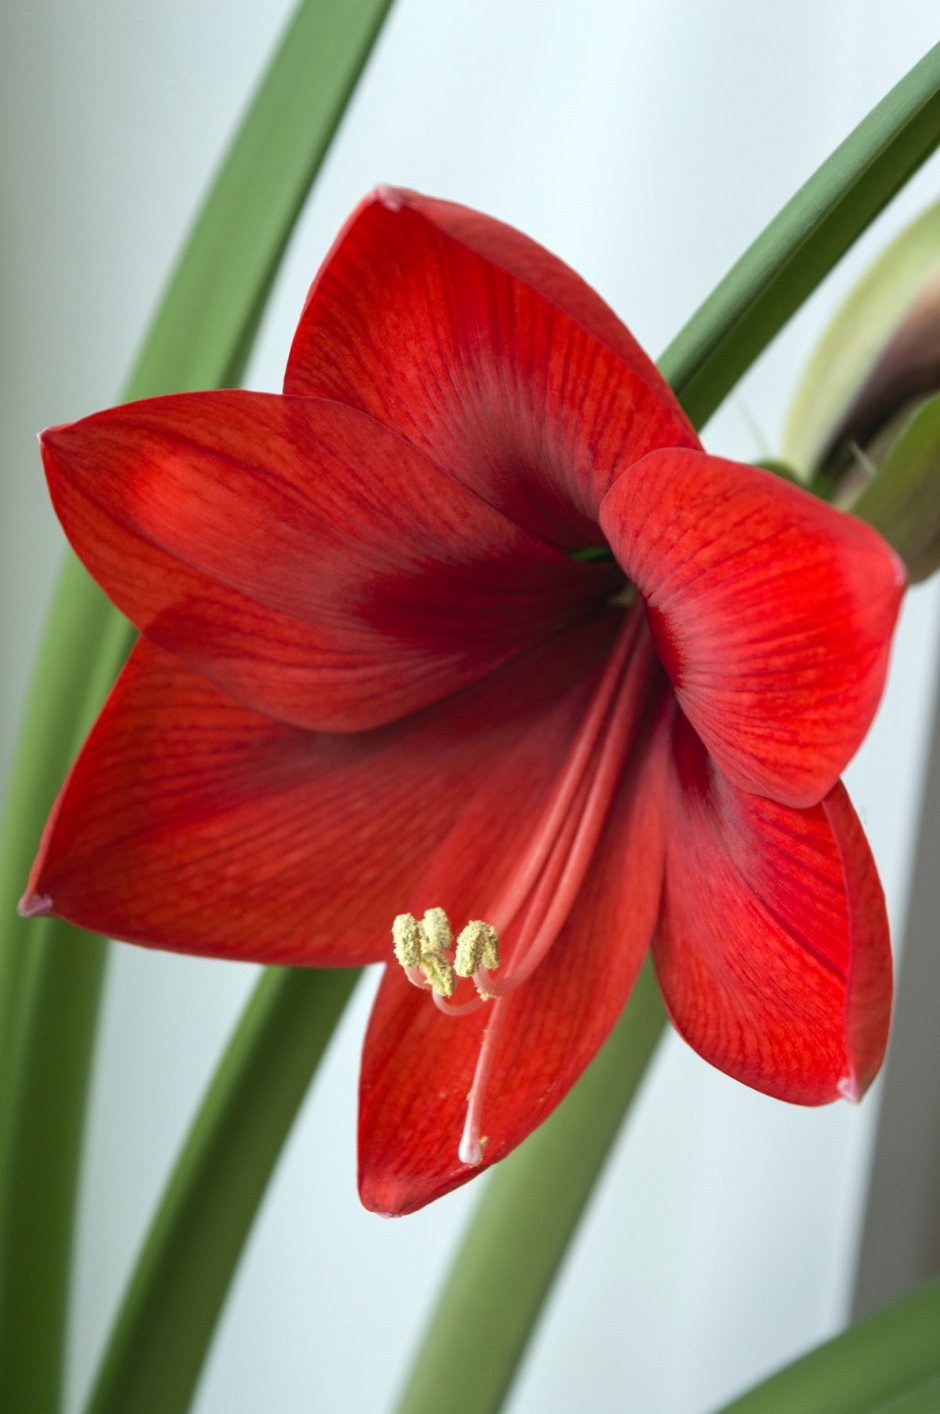 Луковичный цветок амариллис